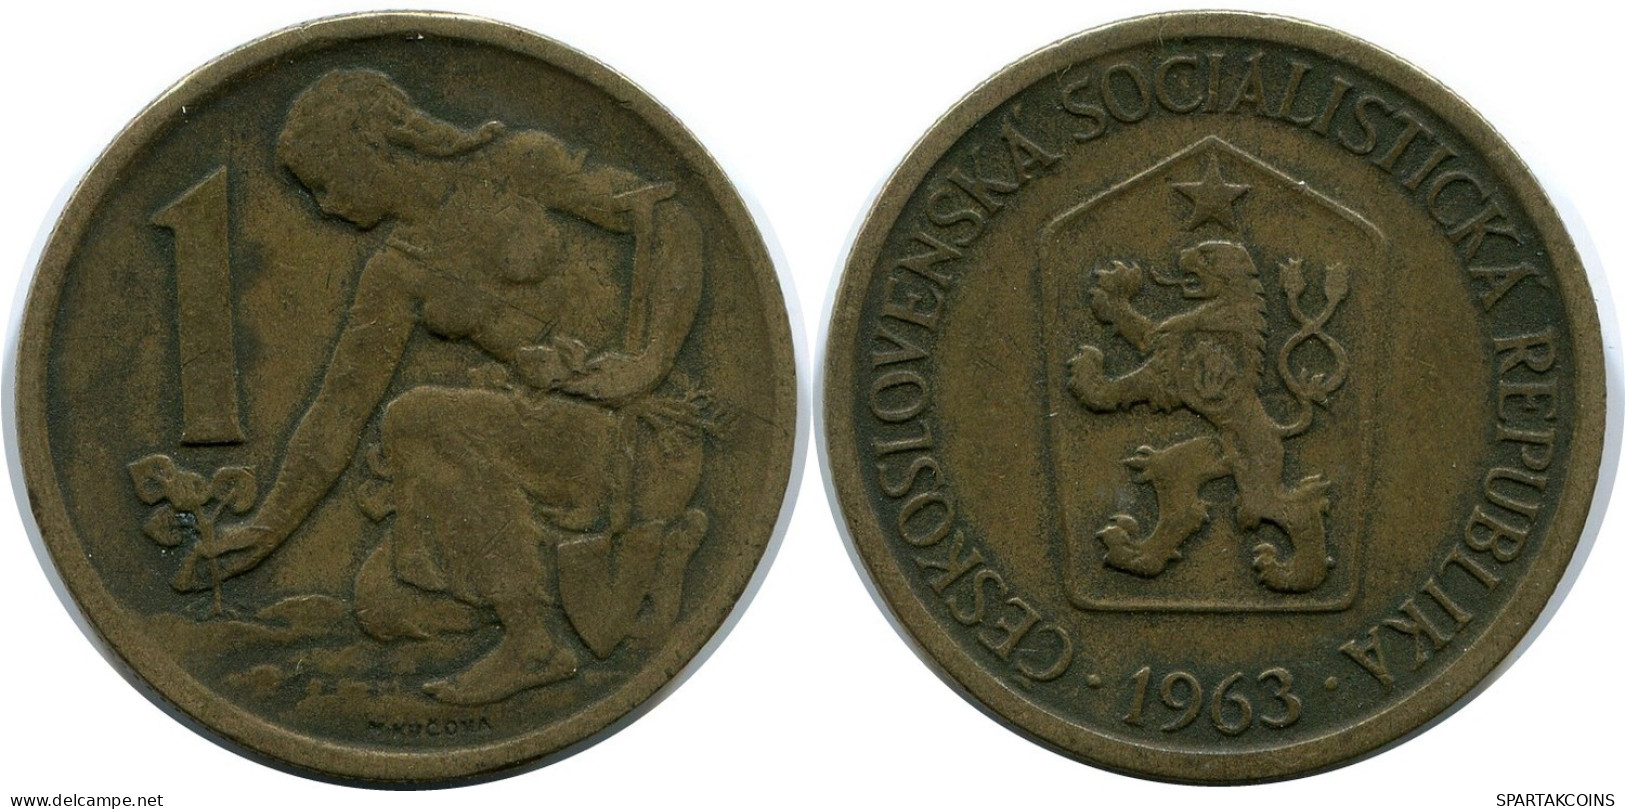 1 KORUNA 1936 TSCHECHOSLOWAKEI CZECHOSLOWAKEI SLOVAKIA Münze #AR227.D.A - Tschechoslowakei